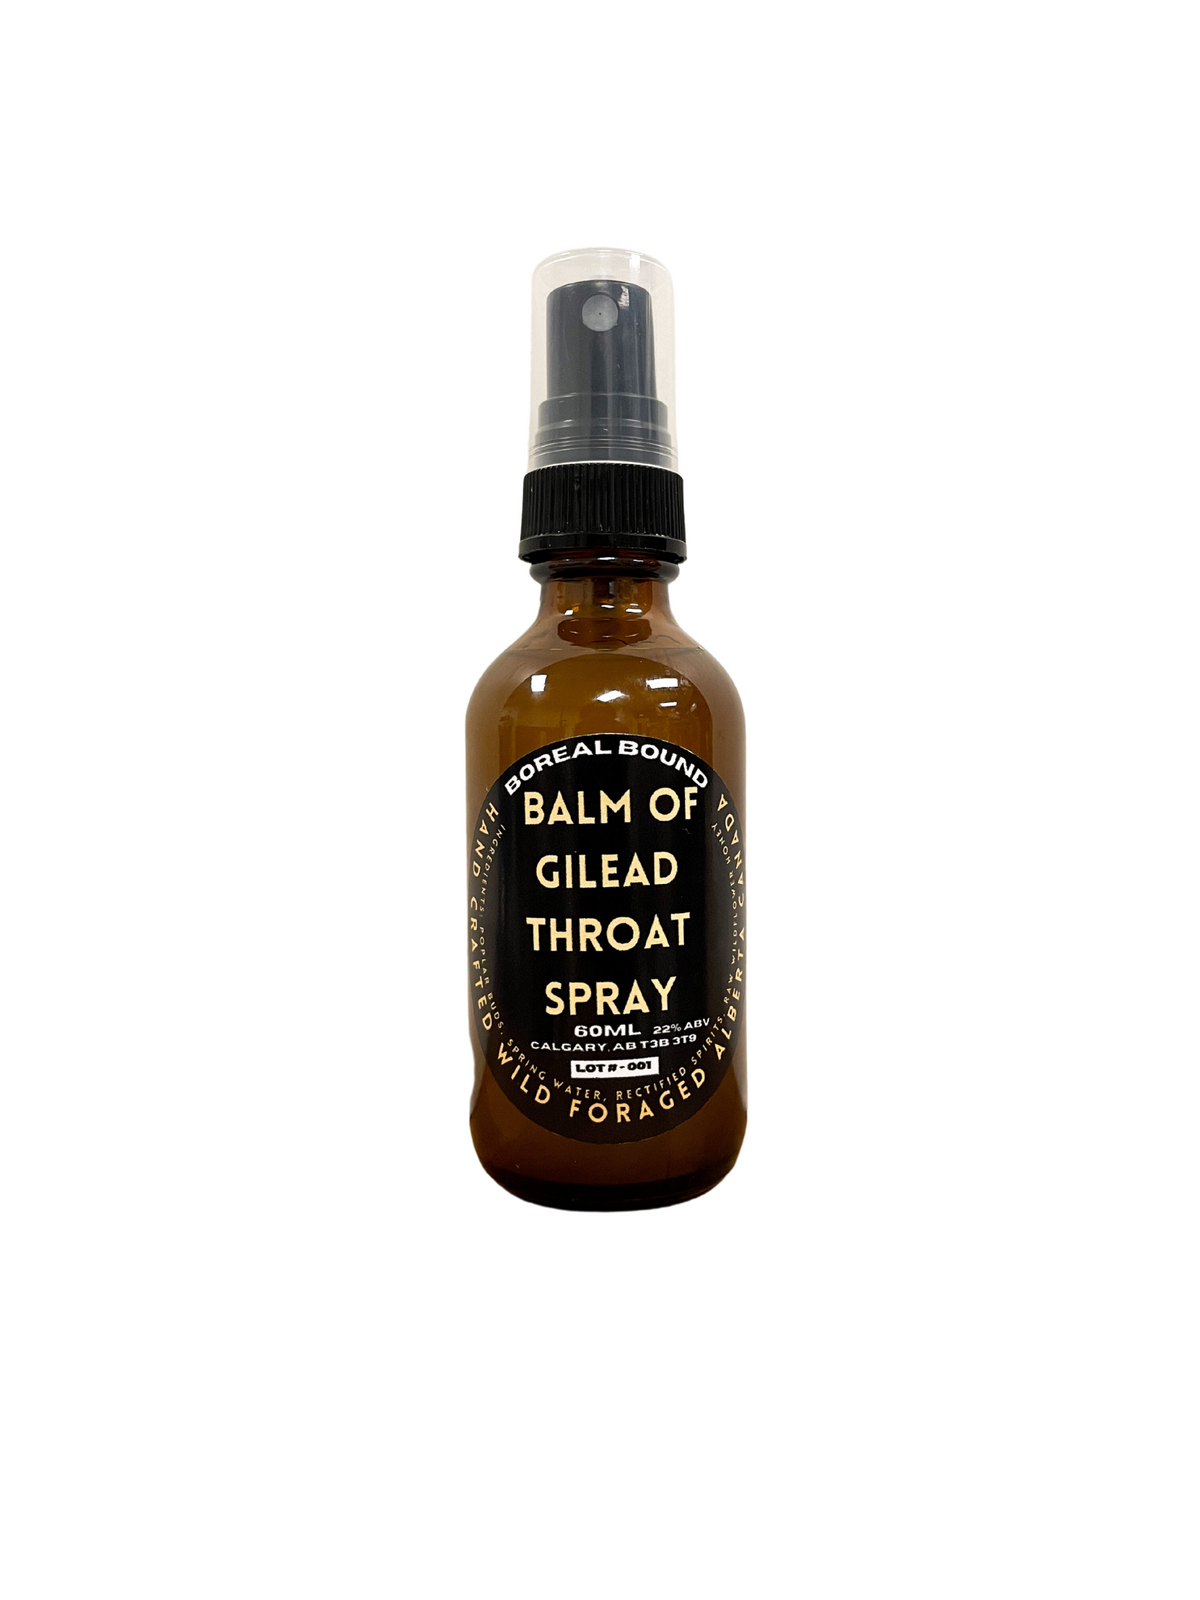 Balm of Gilead Throat Spray